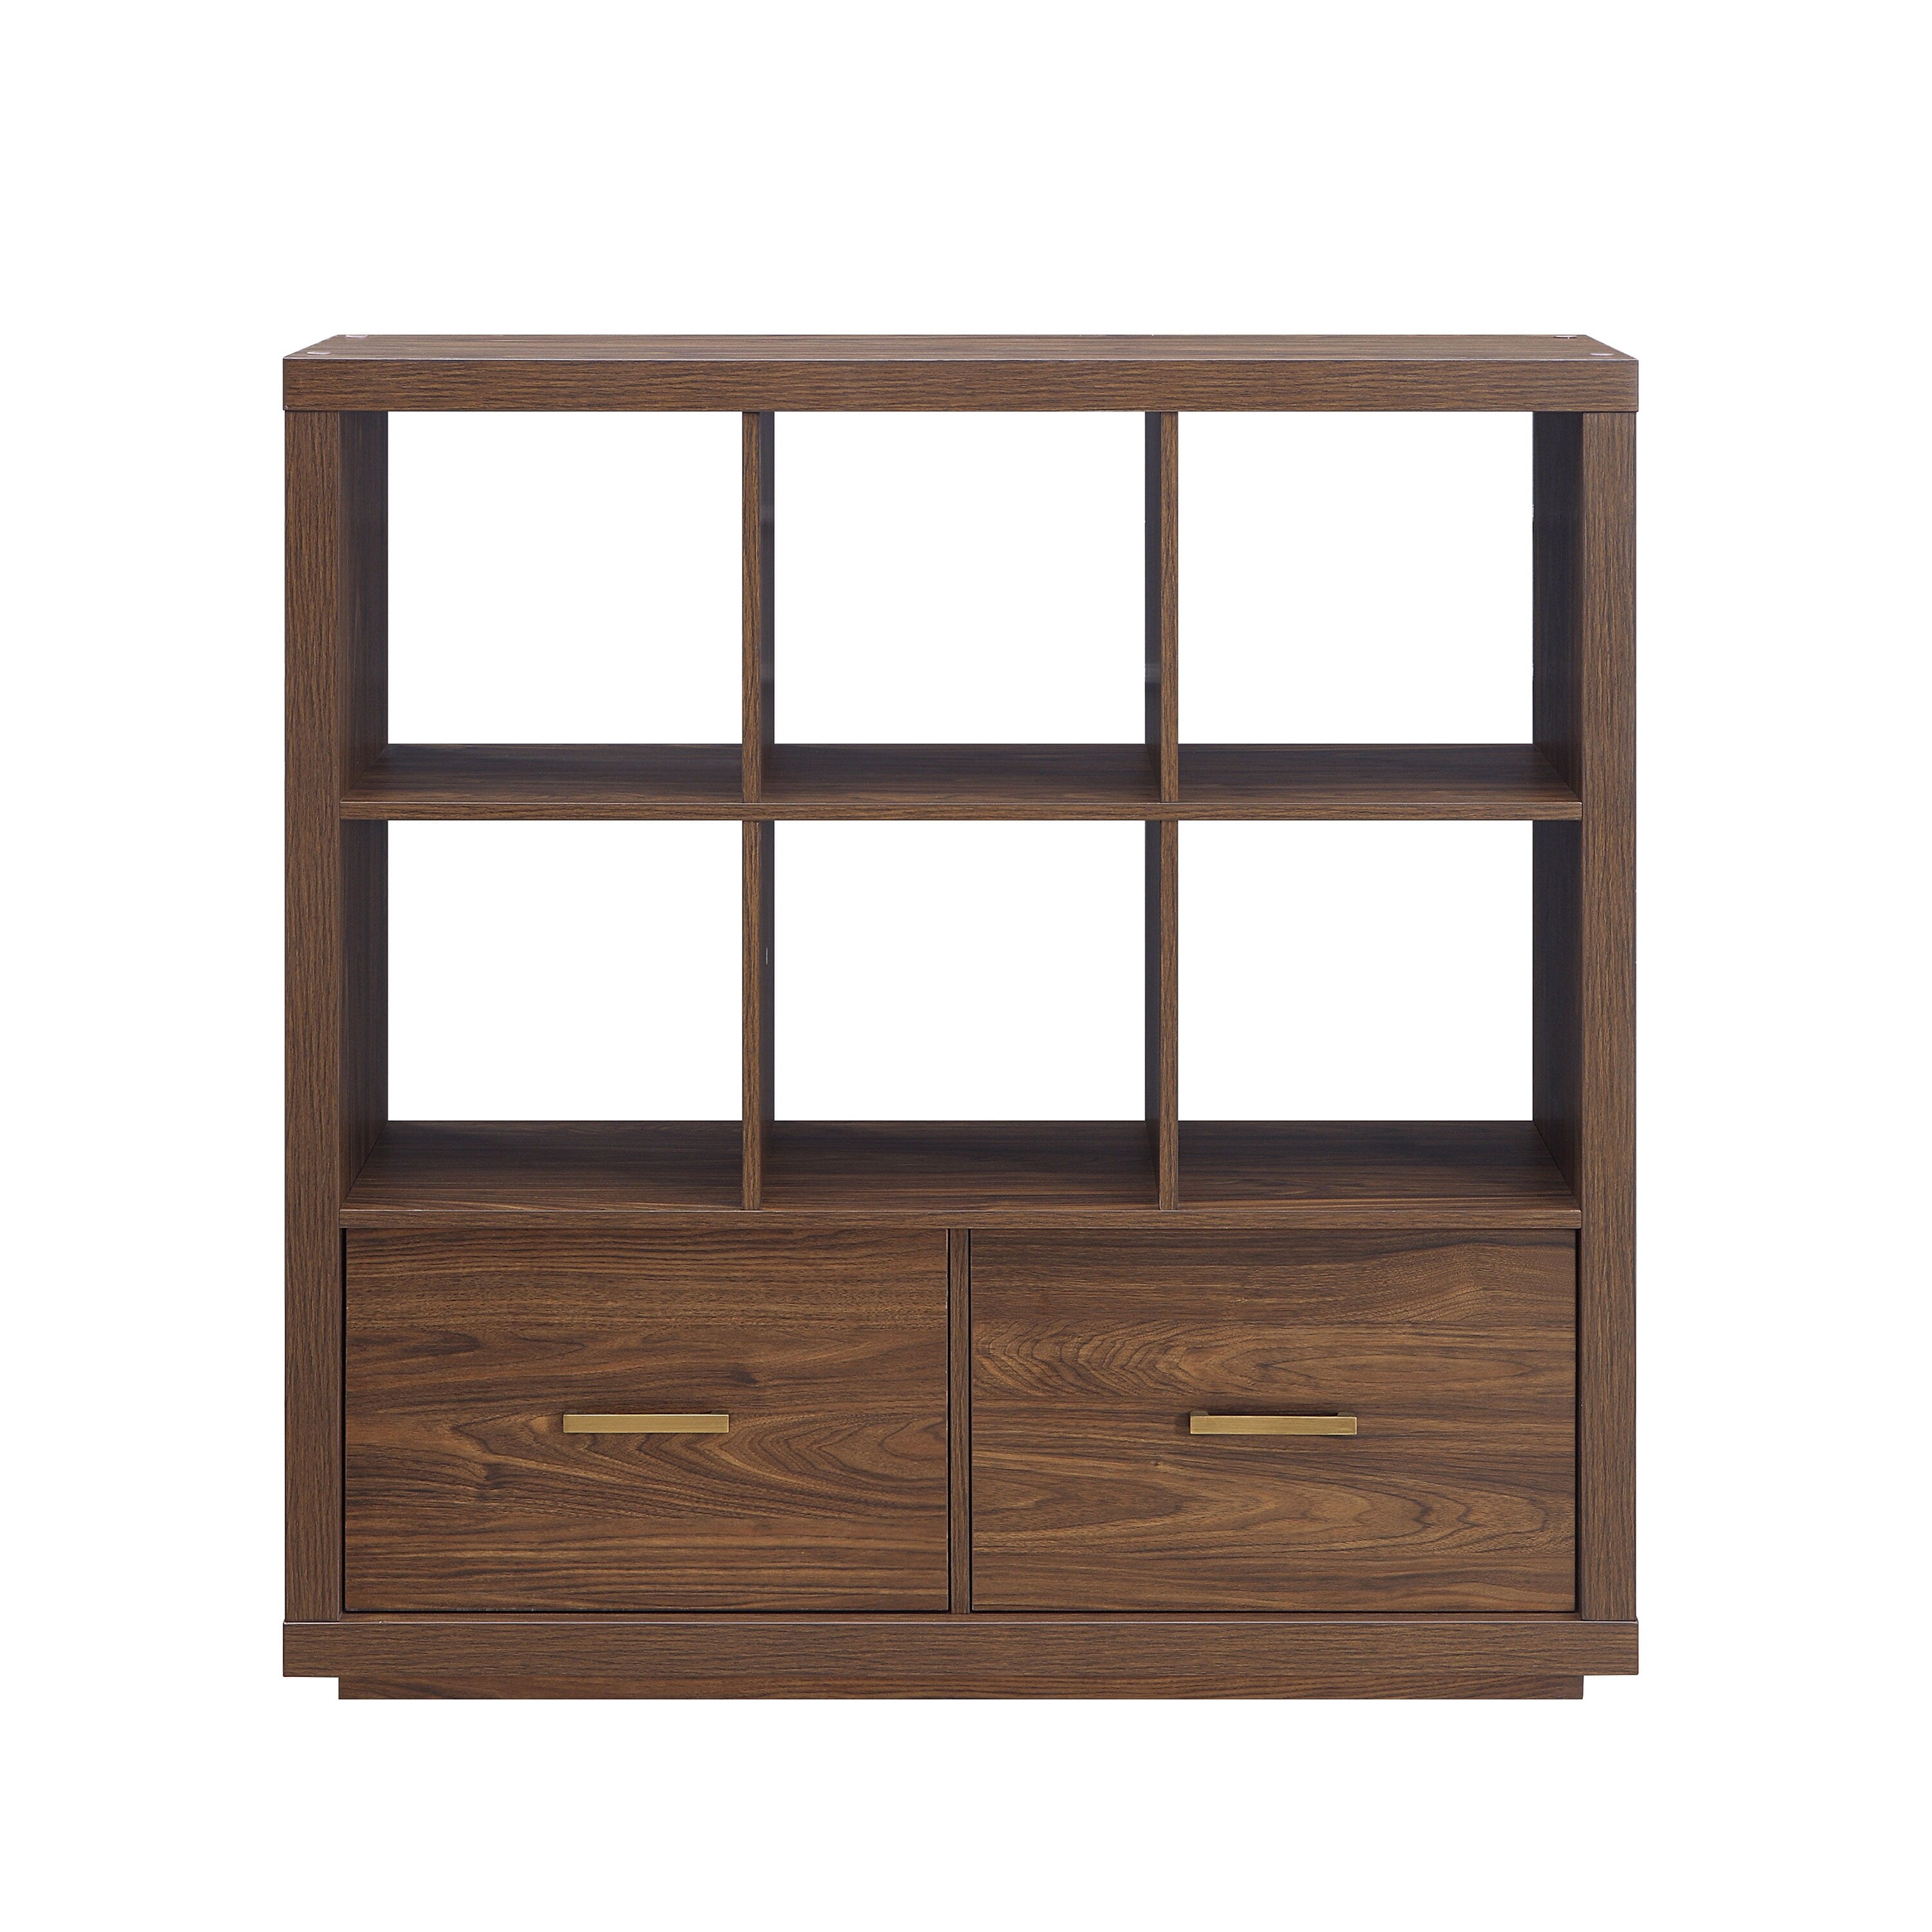 Steele 6 Cube Storage Bookcase Organizer with Drawers, Multiple Finishes - Walnut